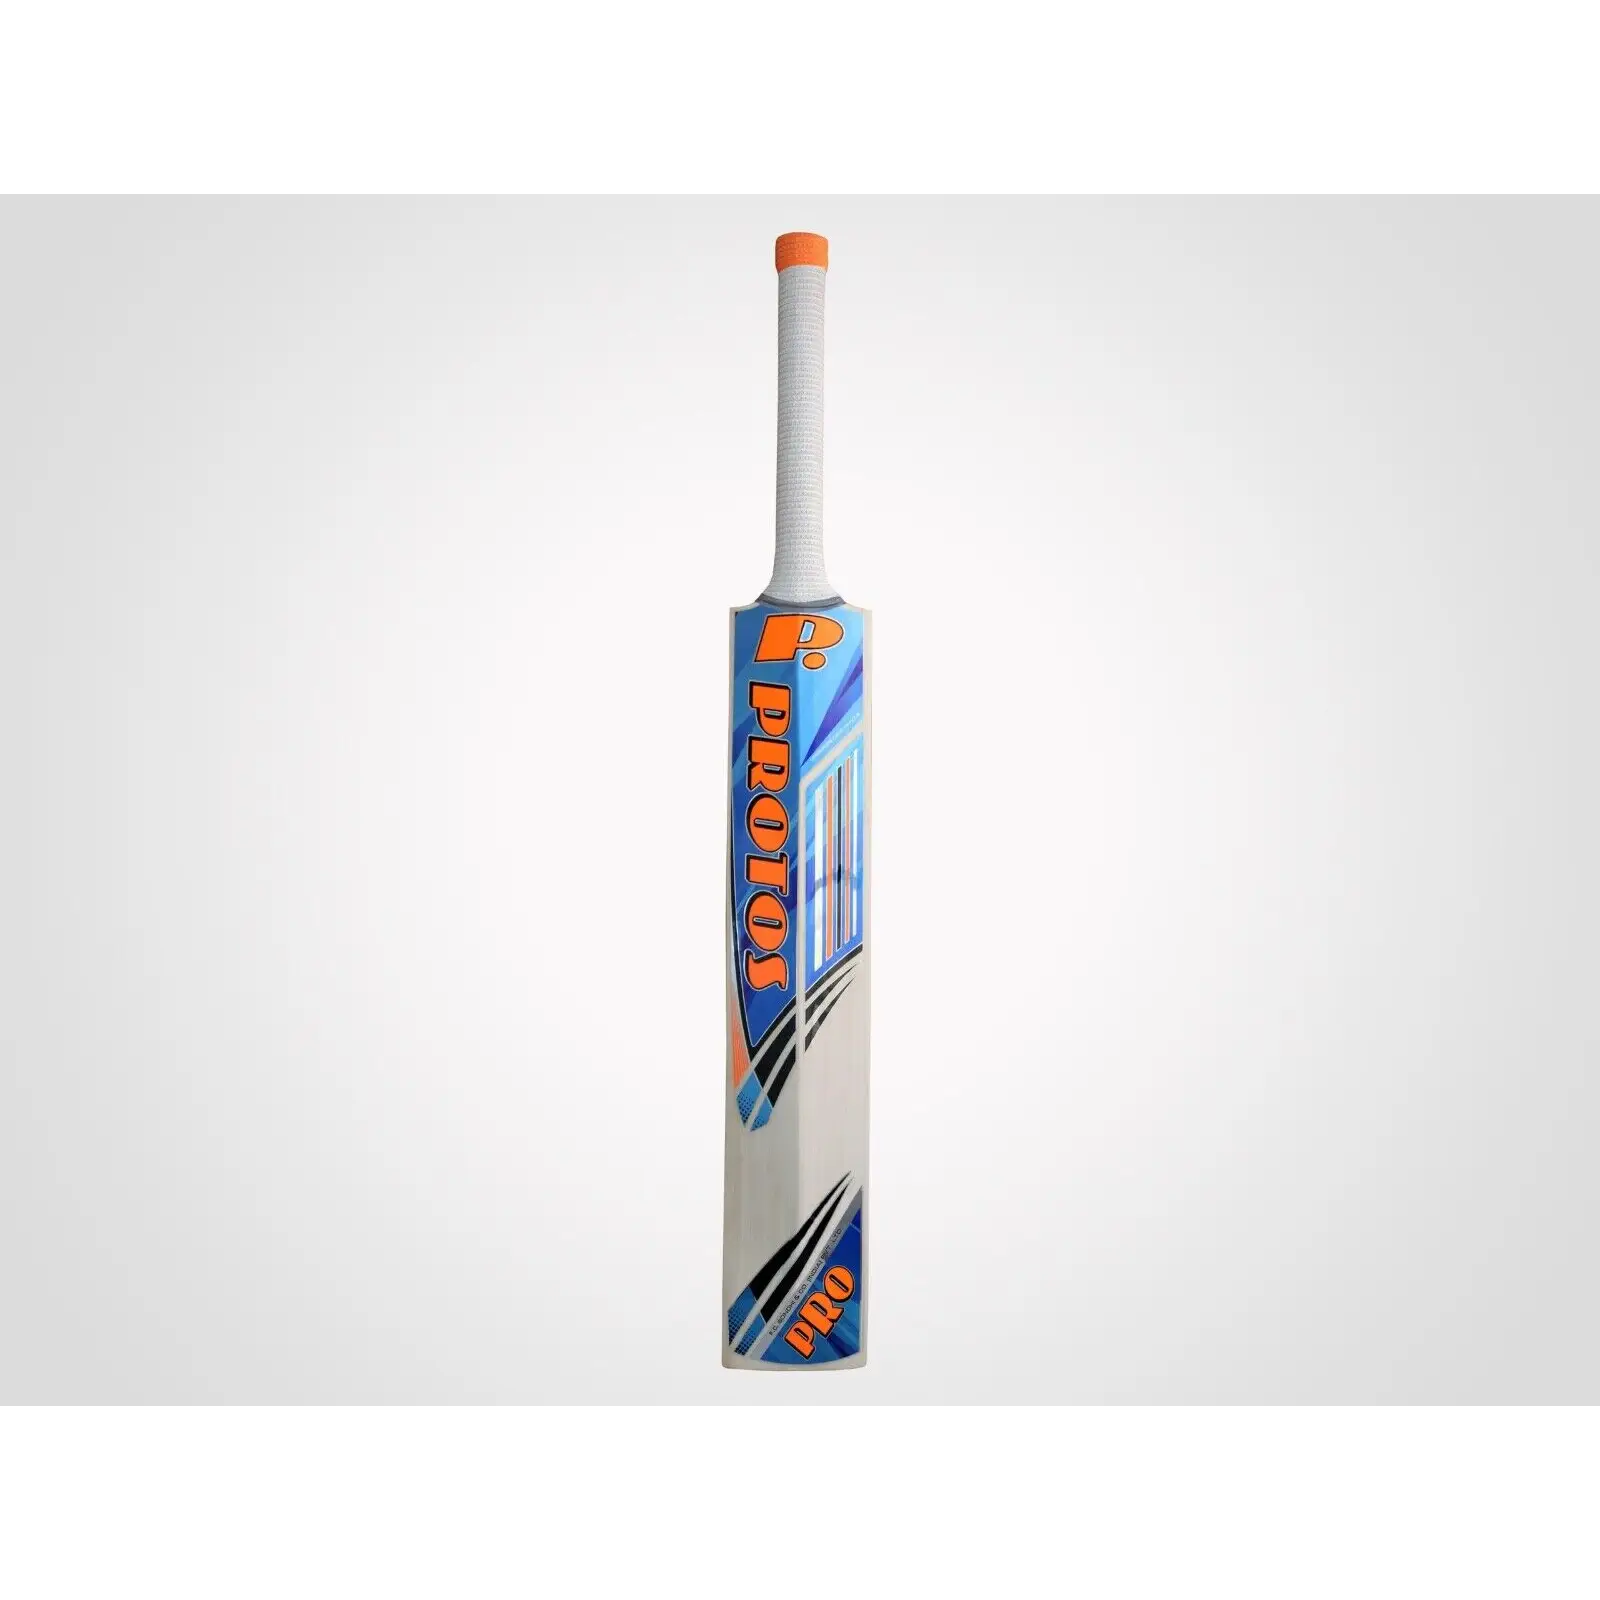 Protos Pro Thunder Cricket Bat - Short Handle (Standard Adult Size Bat) - BATS - MENS ENGLISH WILLOW